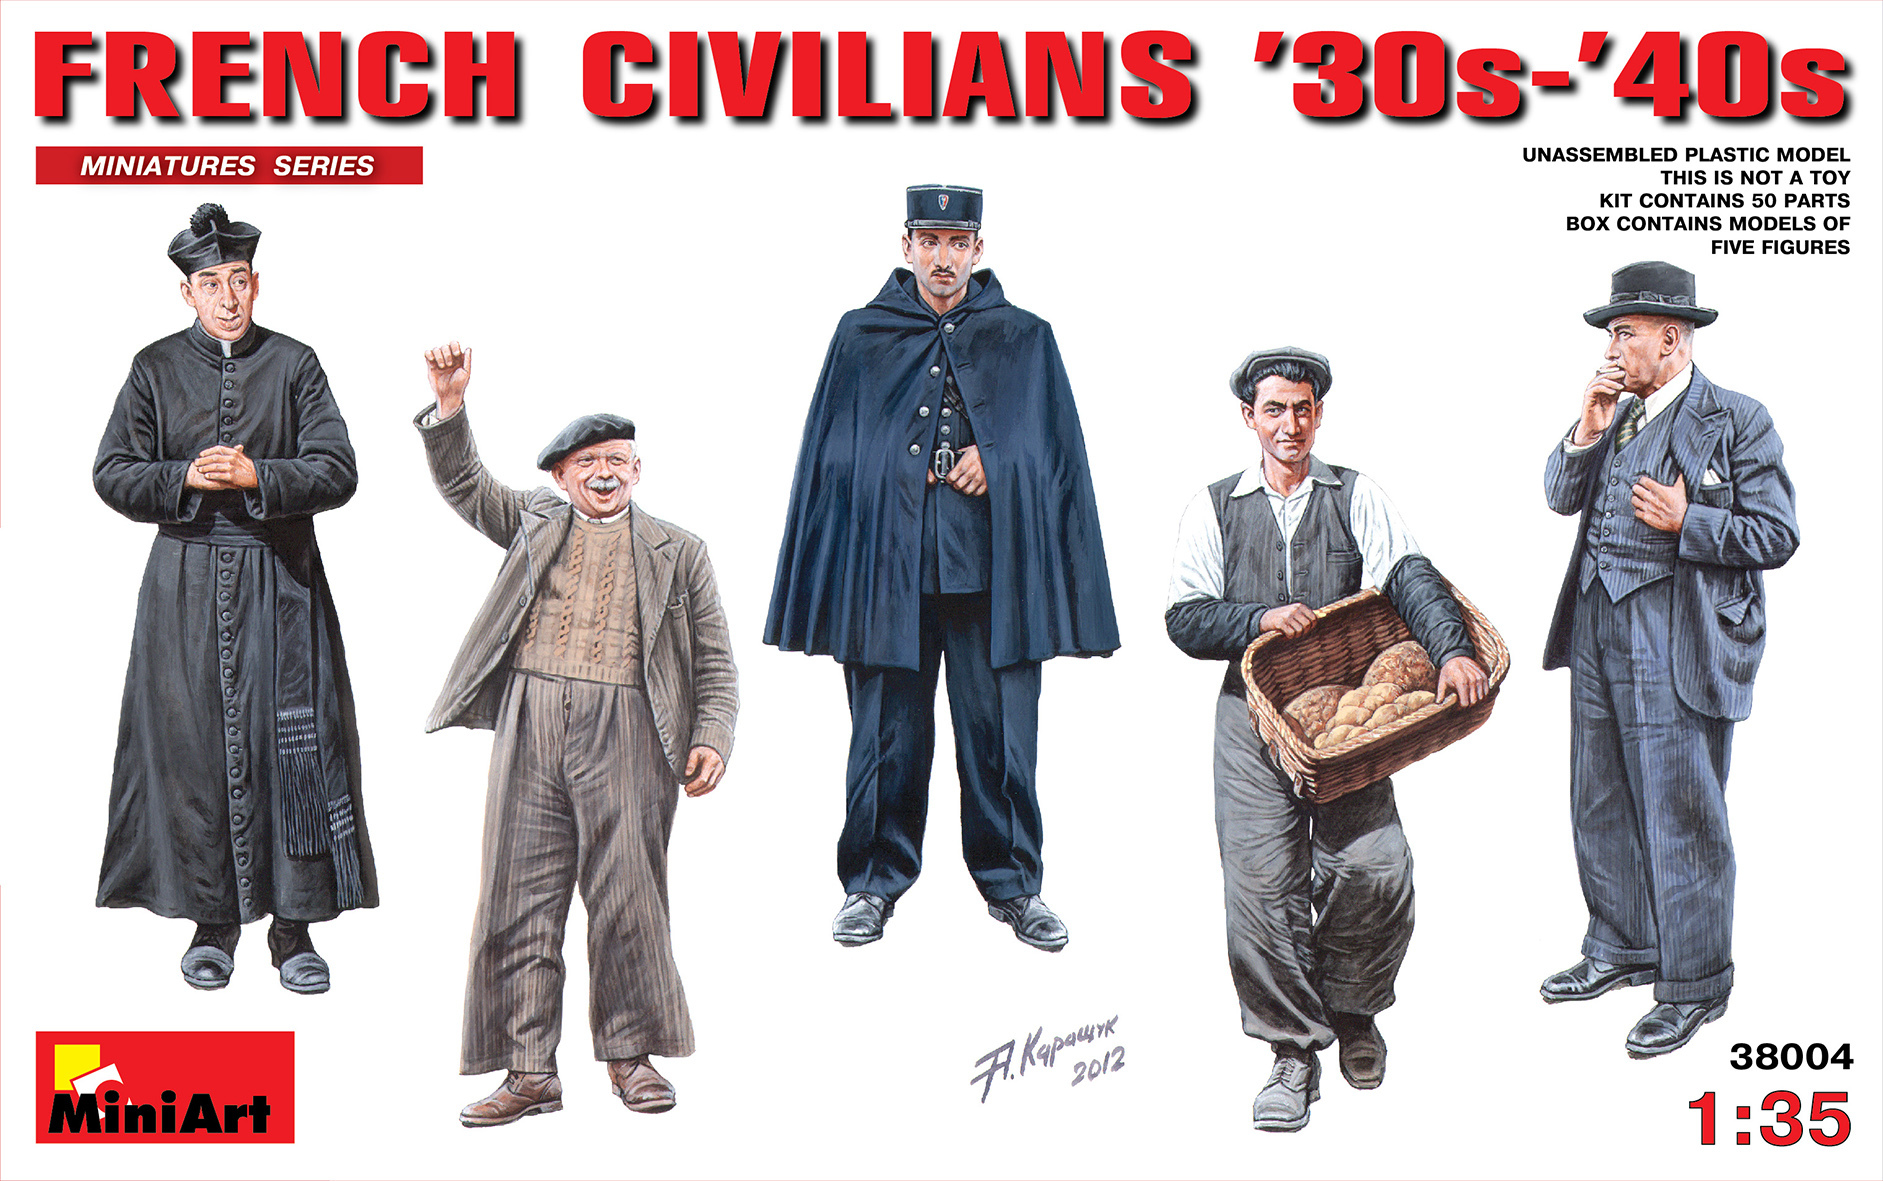 French Civilians 30s-40s